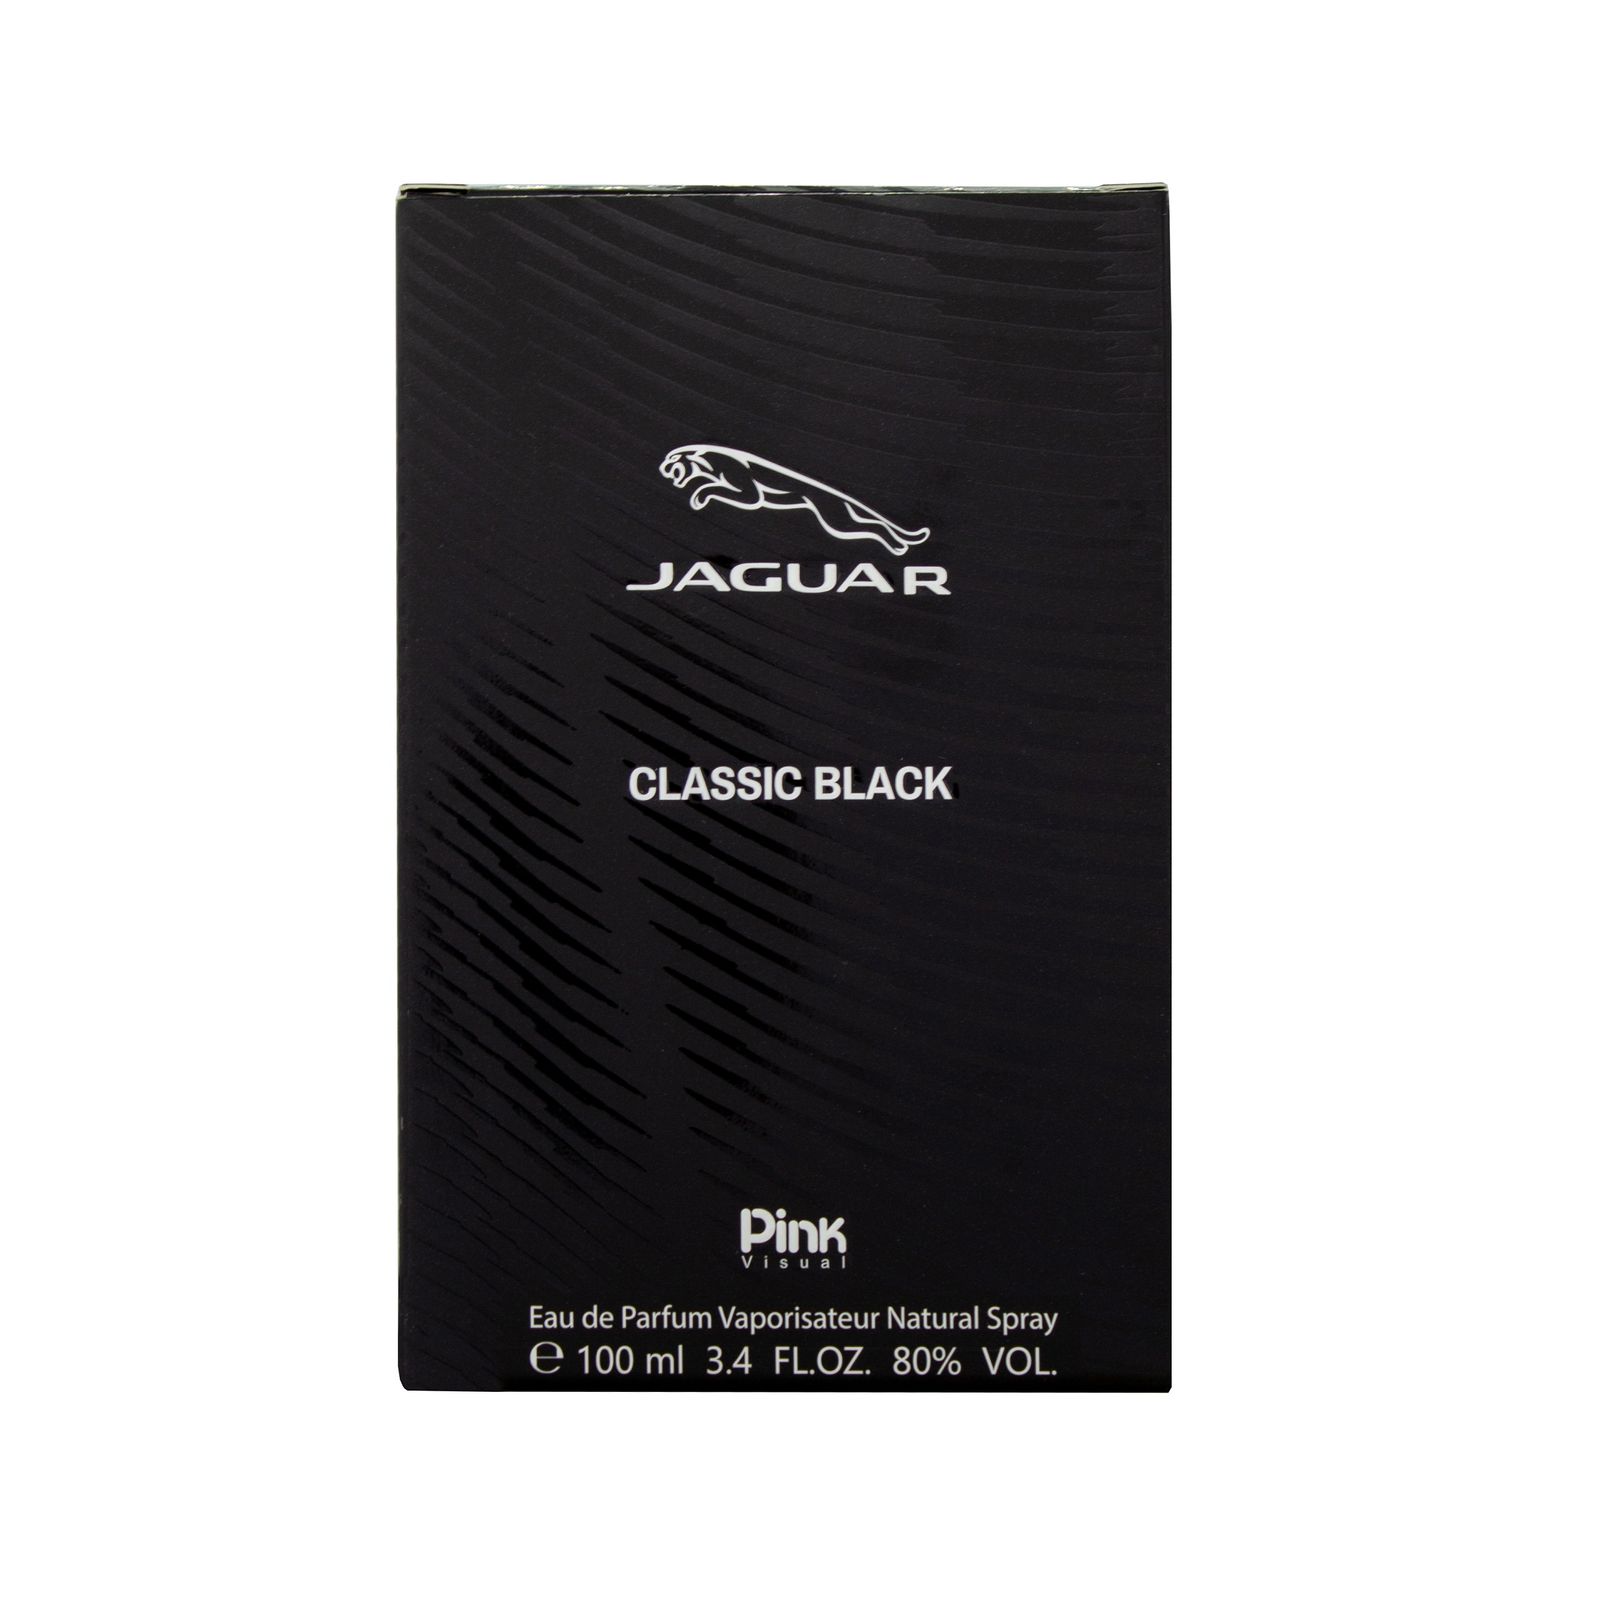 ادو پرفیوم مردانه اسکلاره مدل Jaguar Classic Black حجم 100 میلی لیتر -  - 2